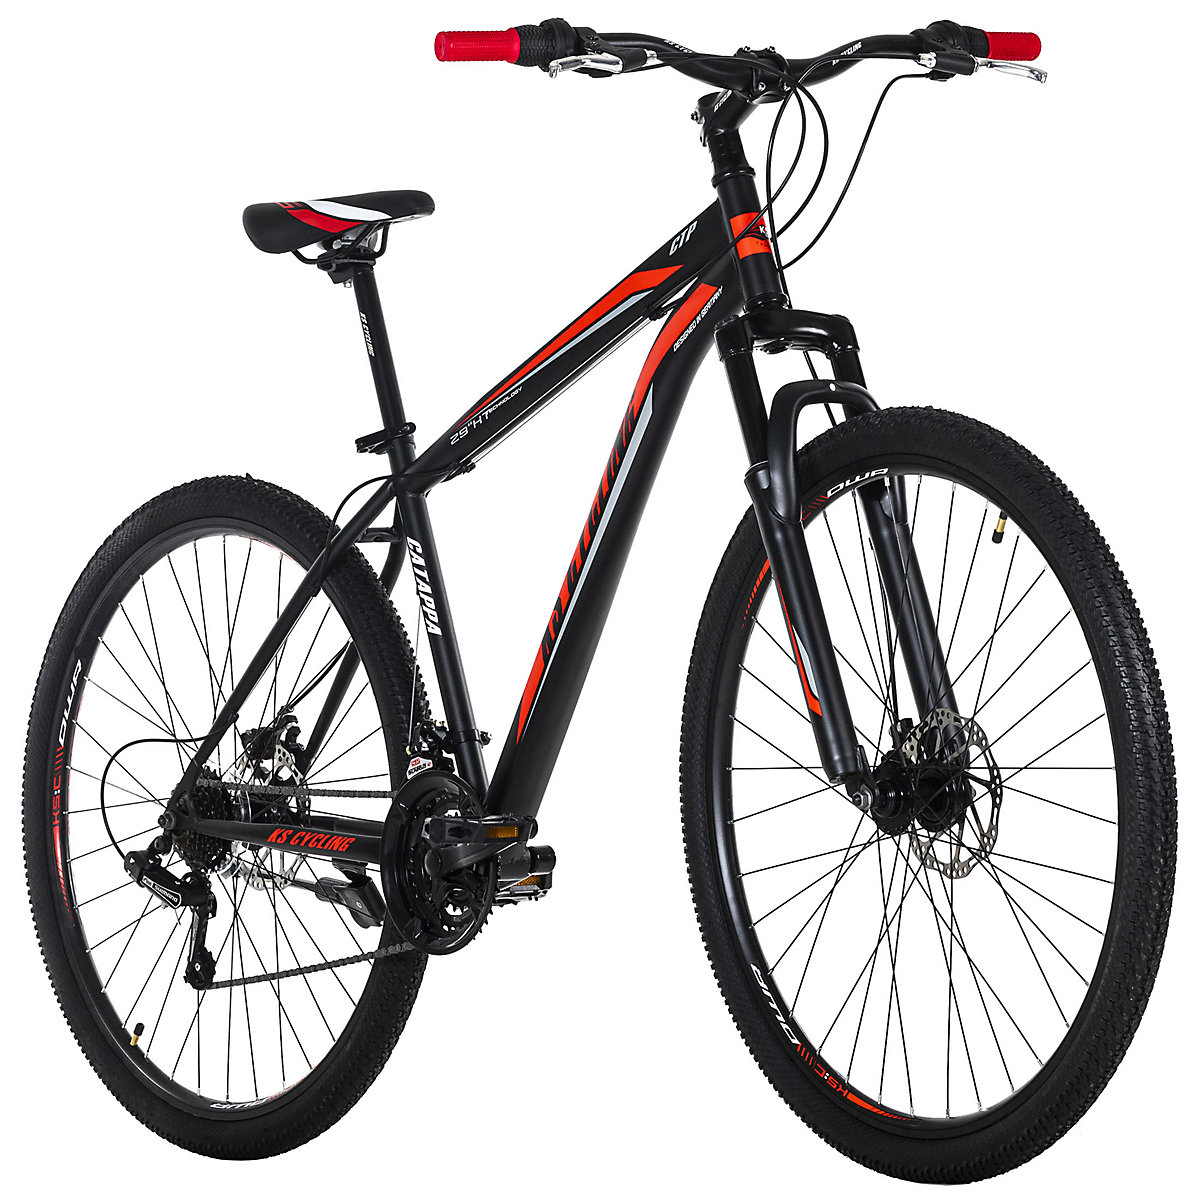 KS Cycling KS Cycling Mountainbike Hardtail 29 Zoll Catappa schwarz-rot Rahmenhöhe: 46 cm schwarz/rot